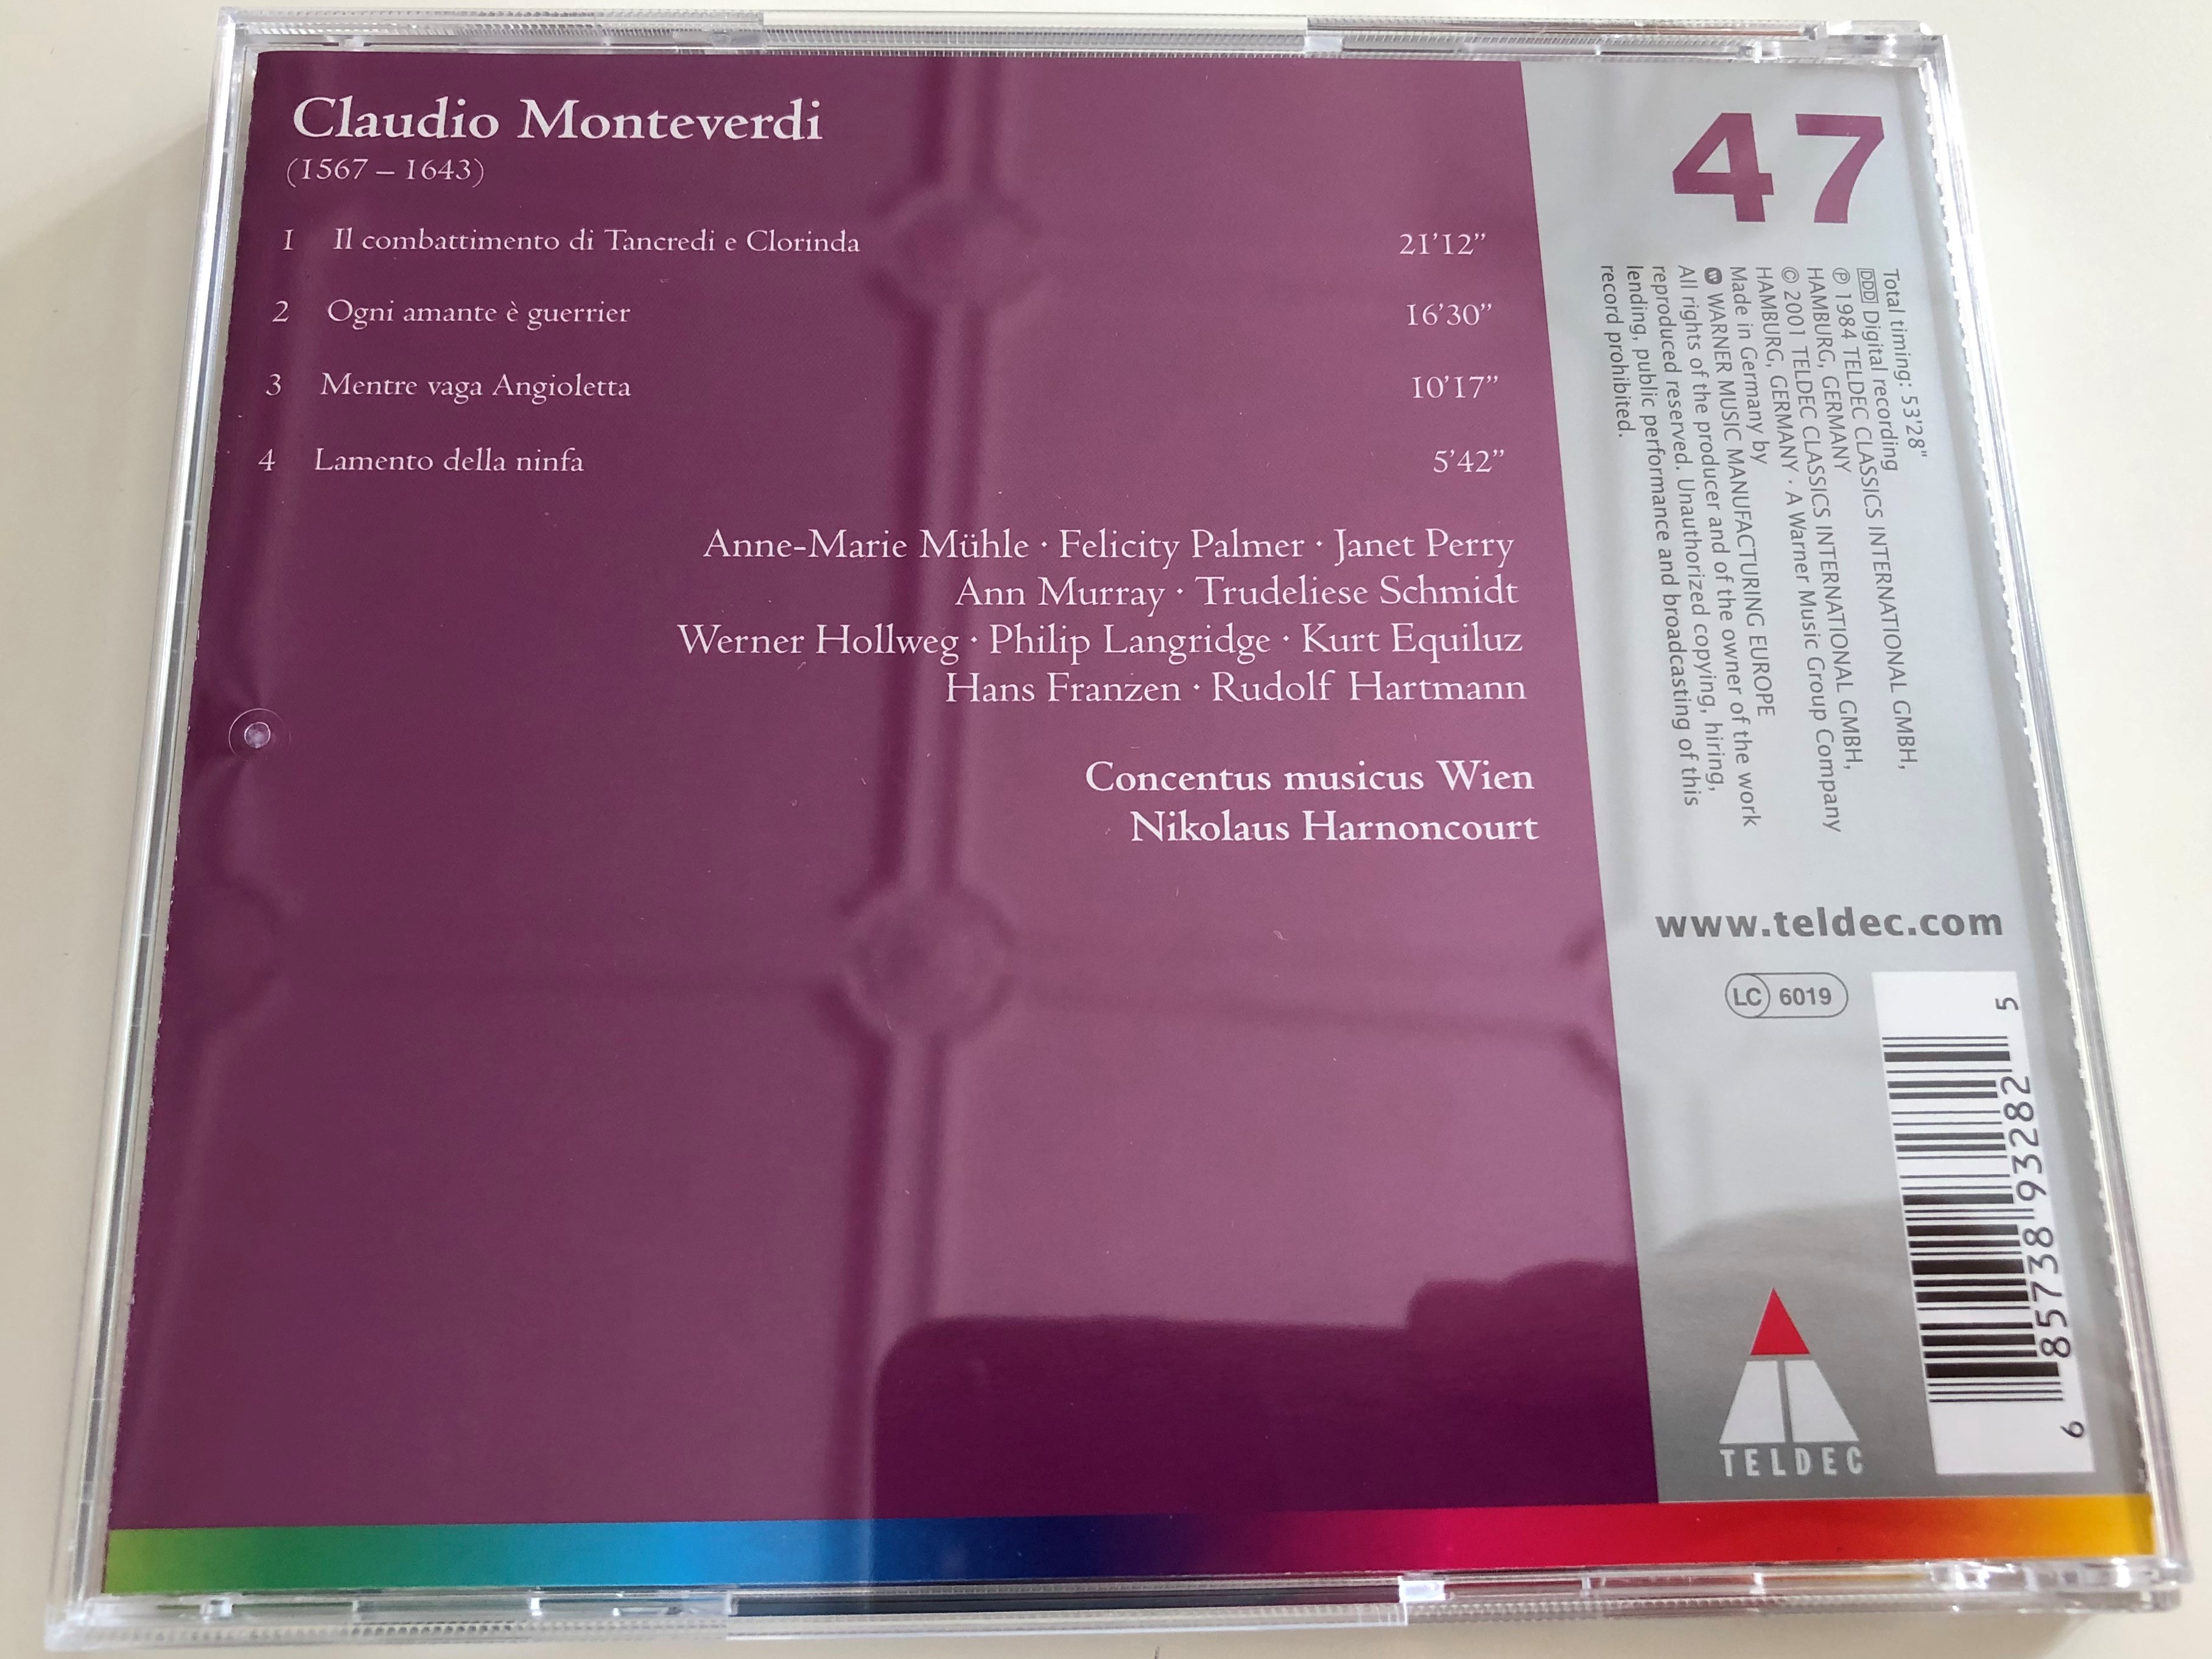 monteverdi-il-combattimento-lamento-della-ninfa-madrigali-murray-schmidt-palmer-perry-hollweg-langridge-equiluz-concentus-musicus-wien-conducted-by-nikolaus-harnoncourt-basic-edition-volume-47-audio-cd-2001-4259876-.jpg